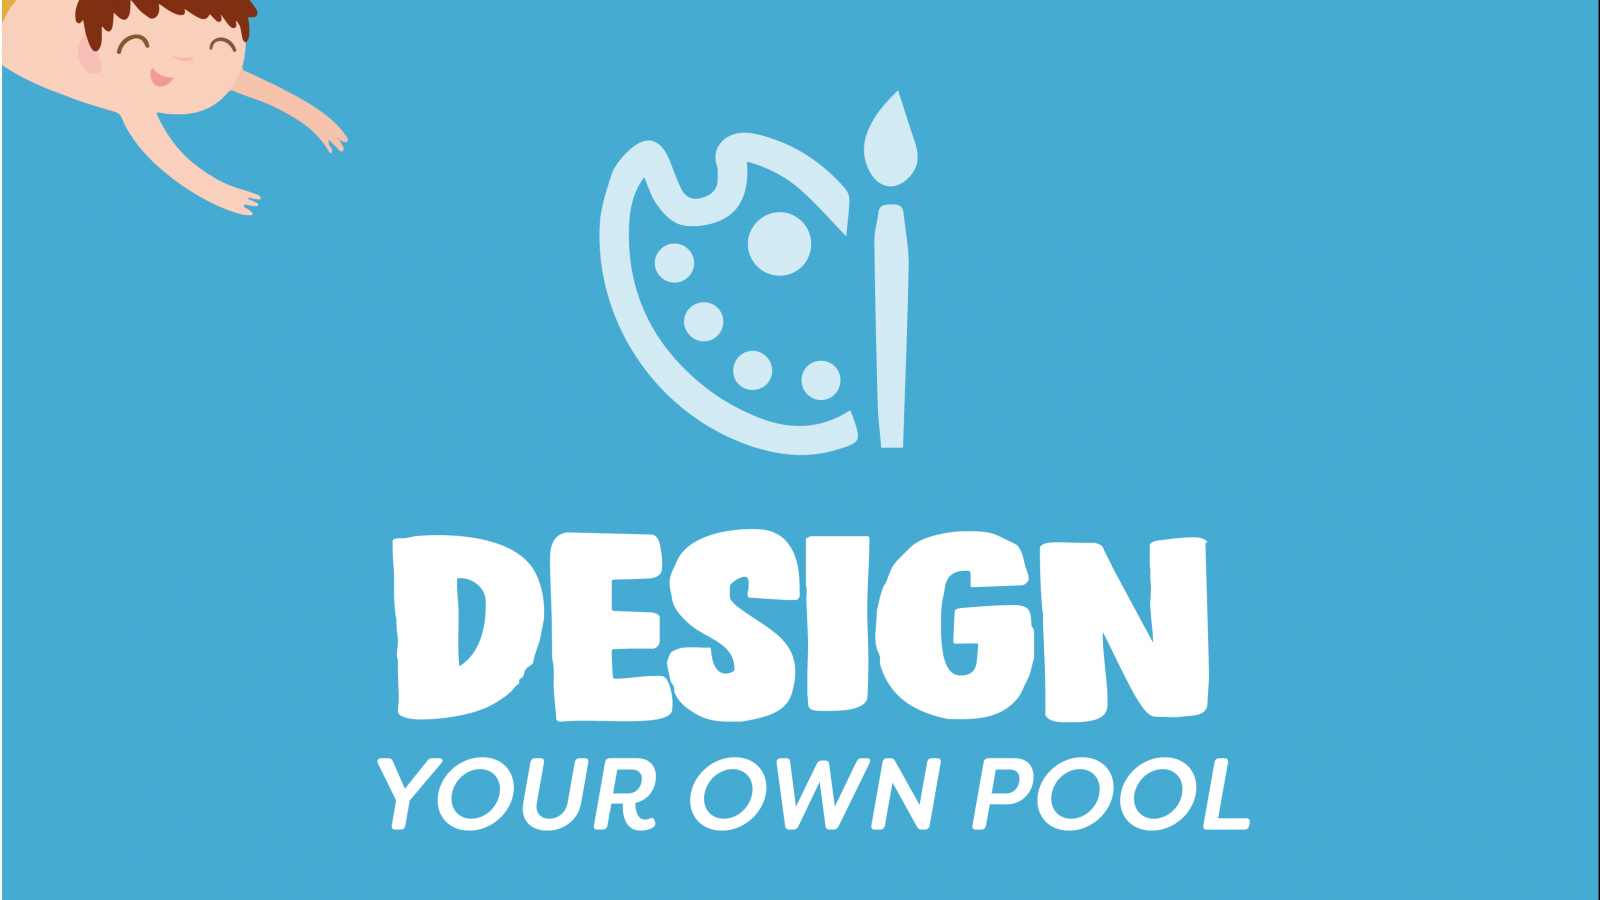 Design pool